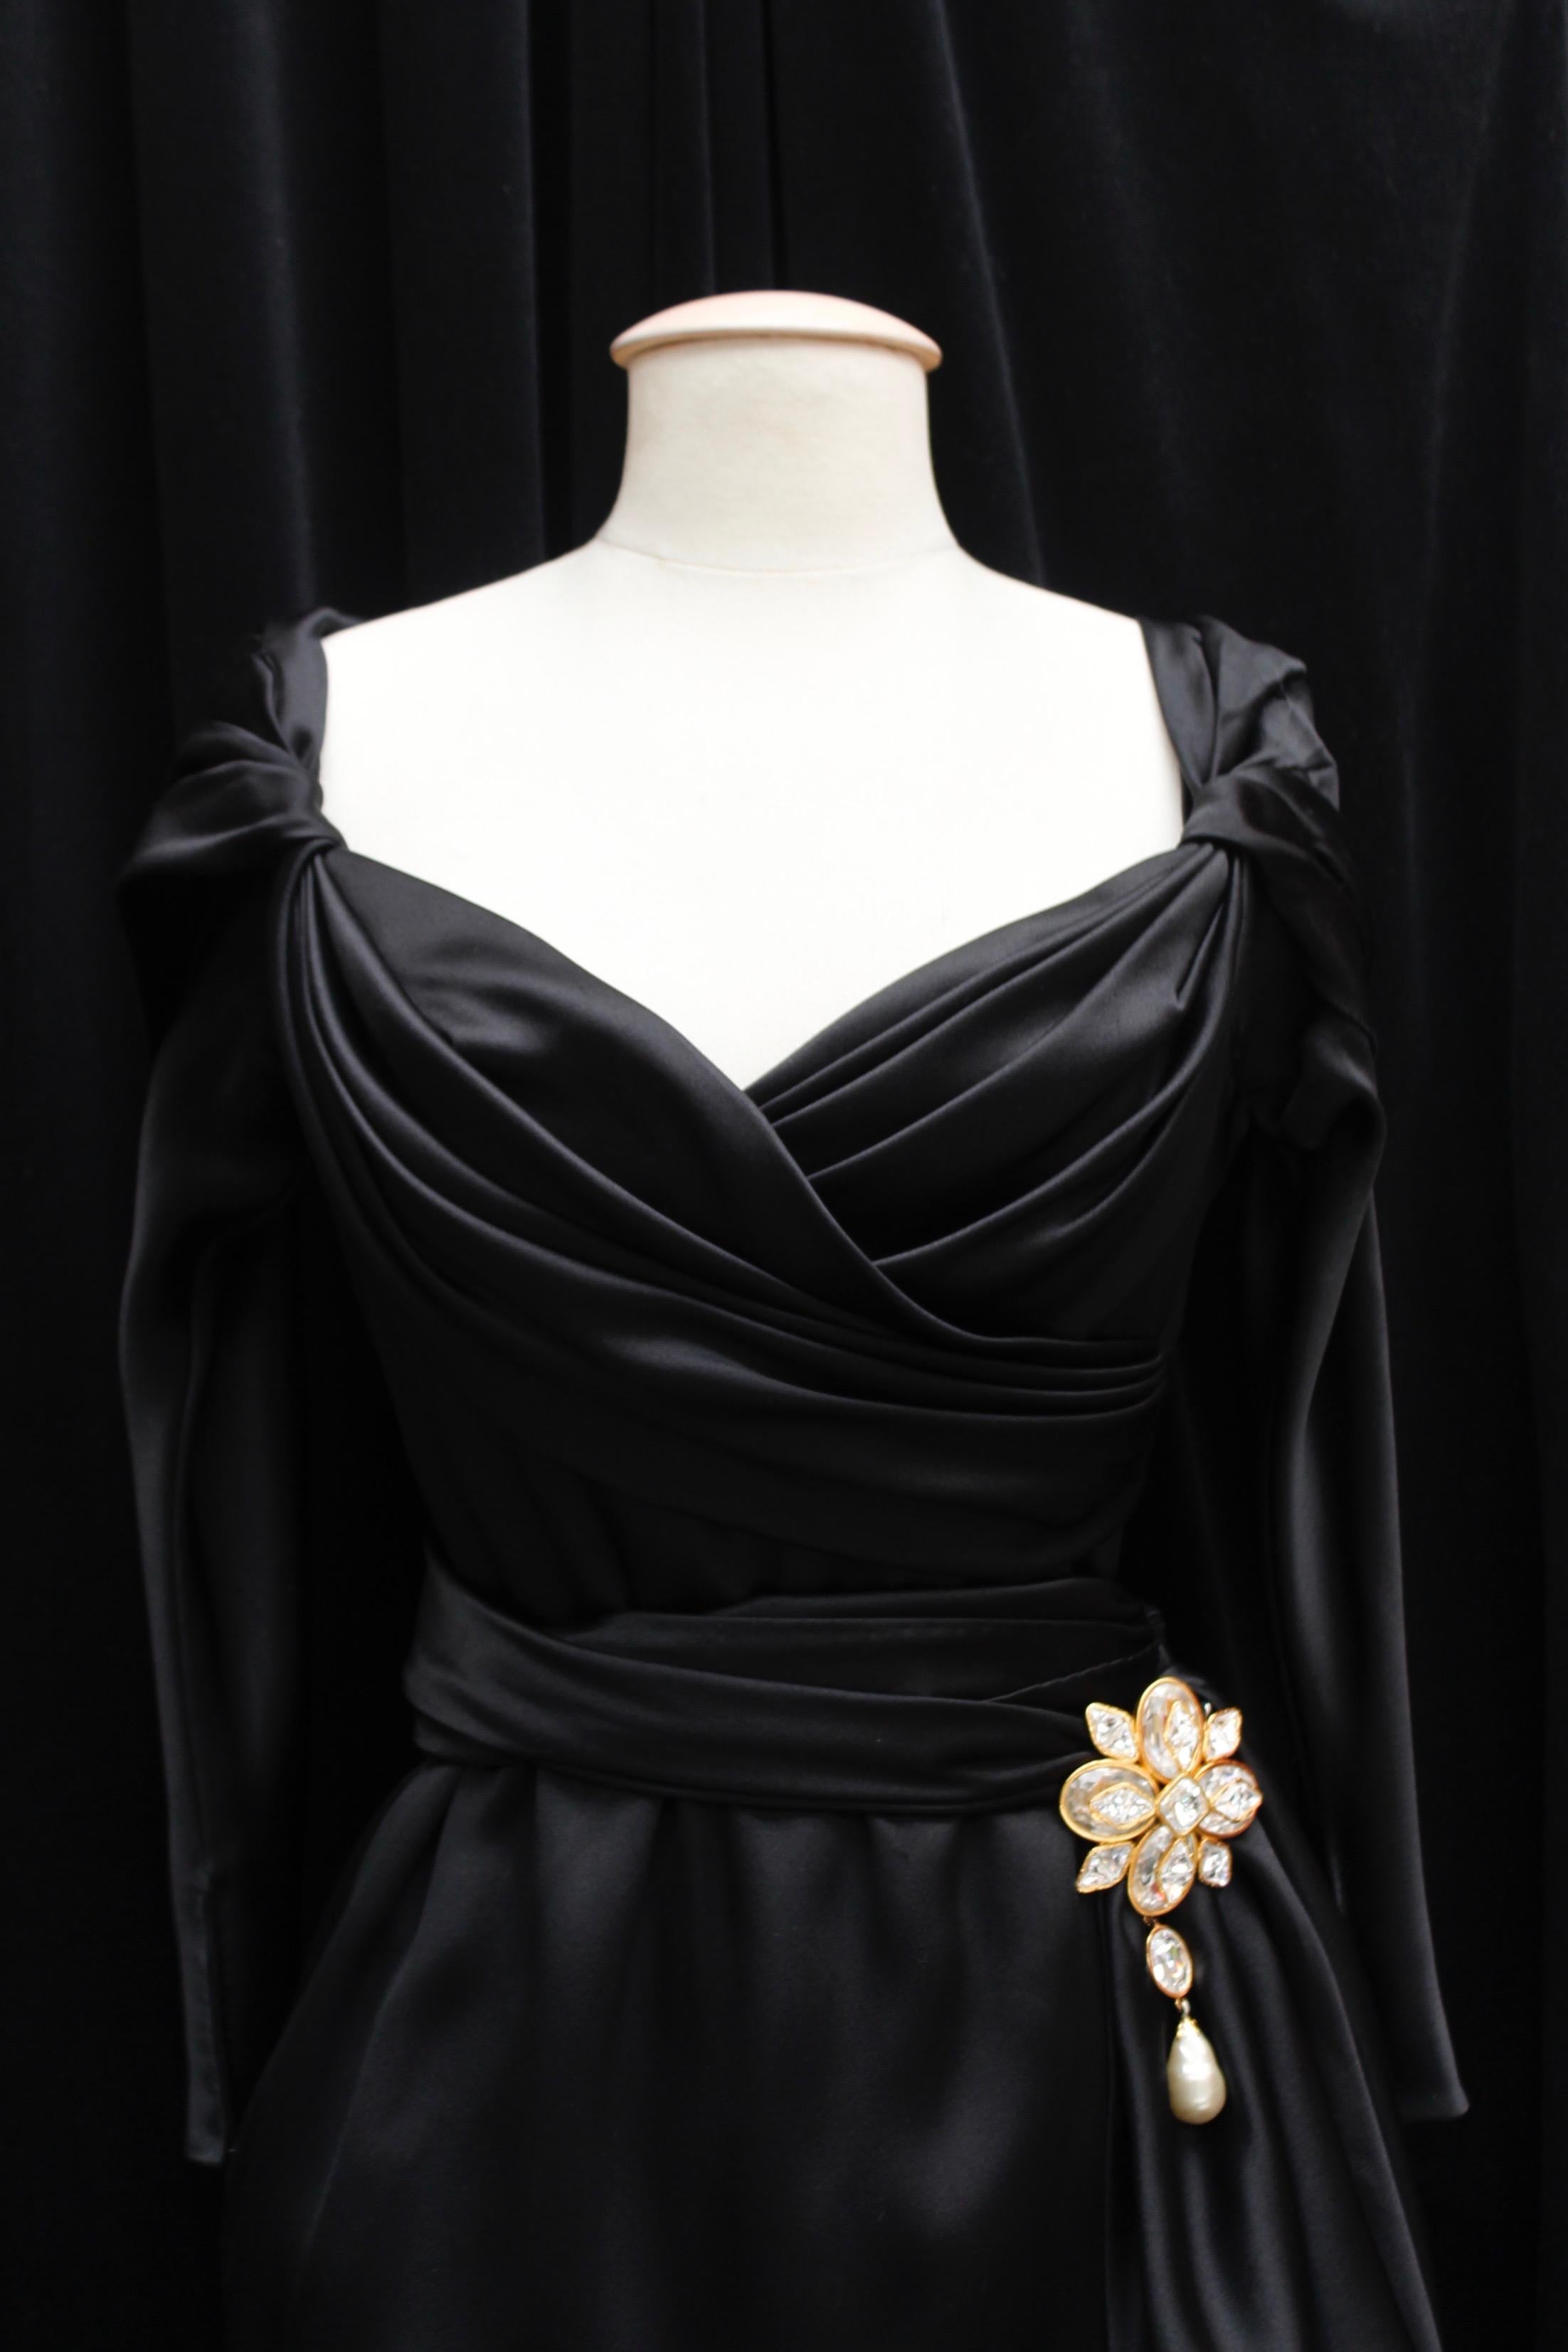 Women's Givenchy Haute Couture black satin sheath dress